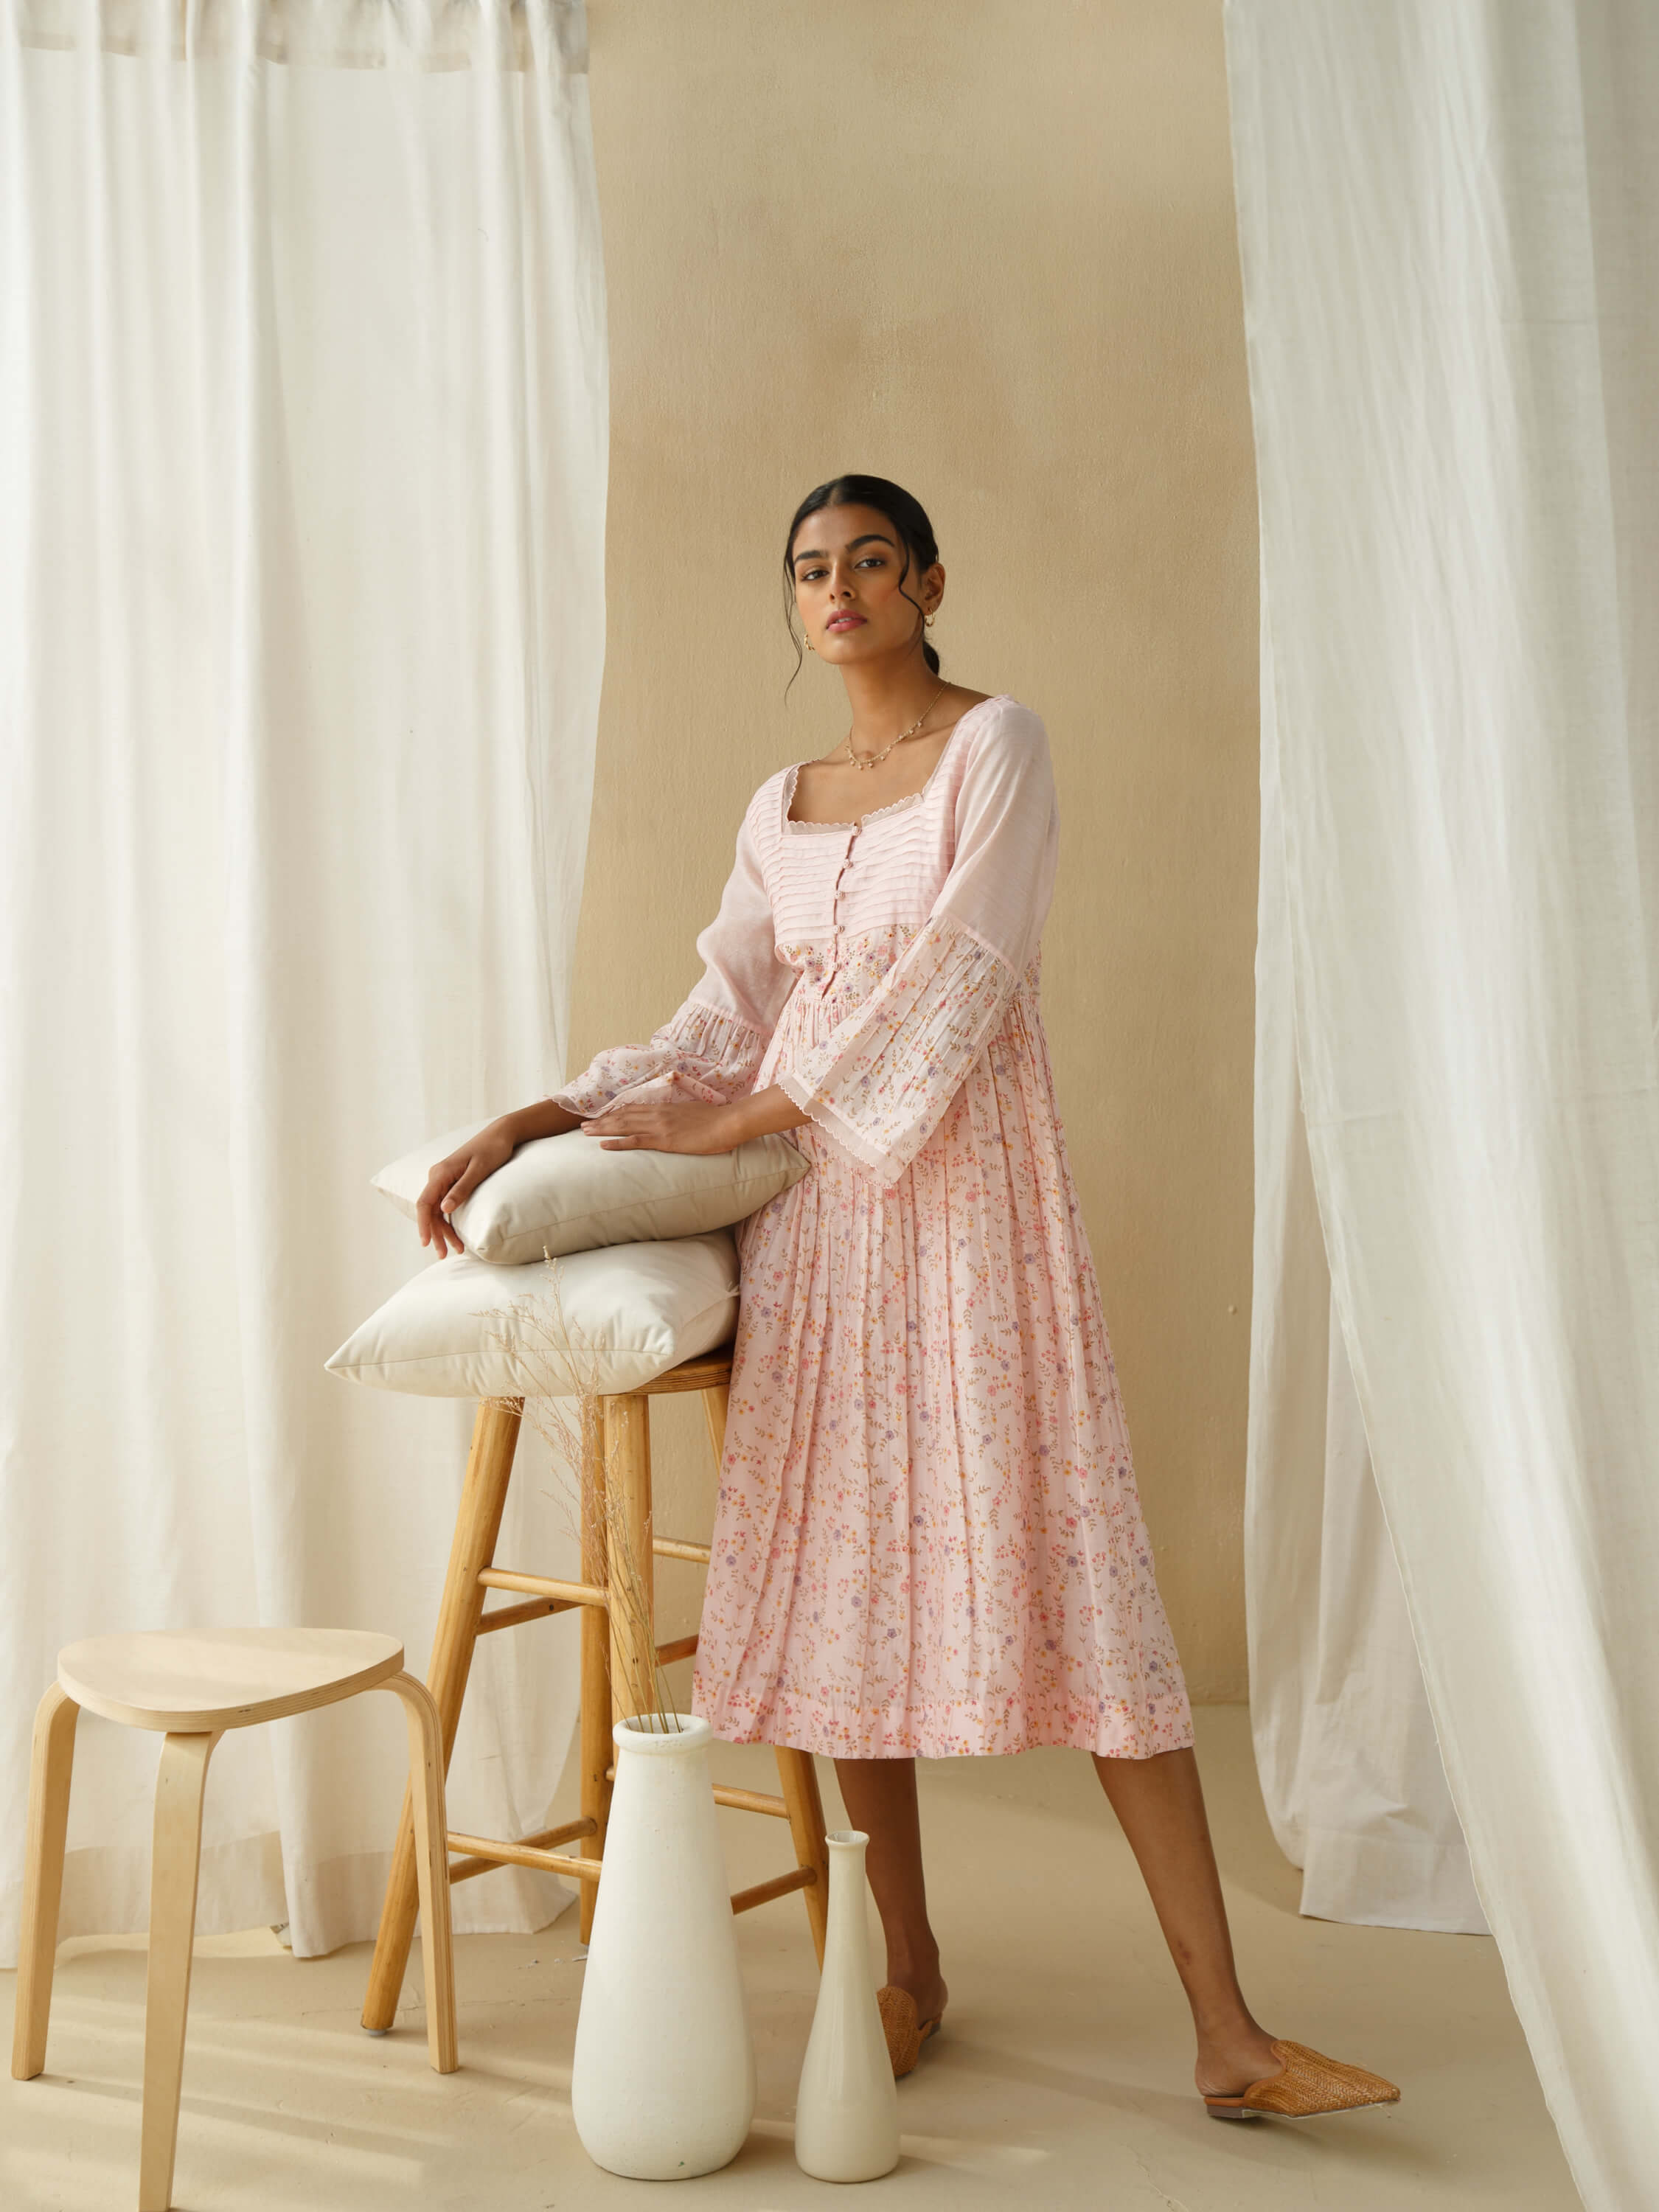 Elegant woman in pink floral dress leaning on stool, minimalist decor